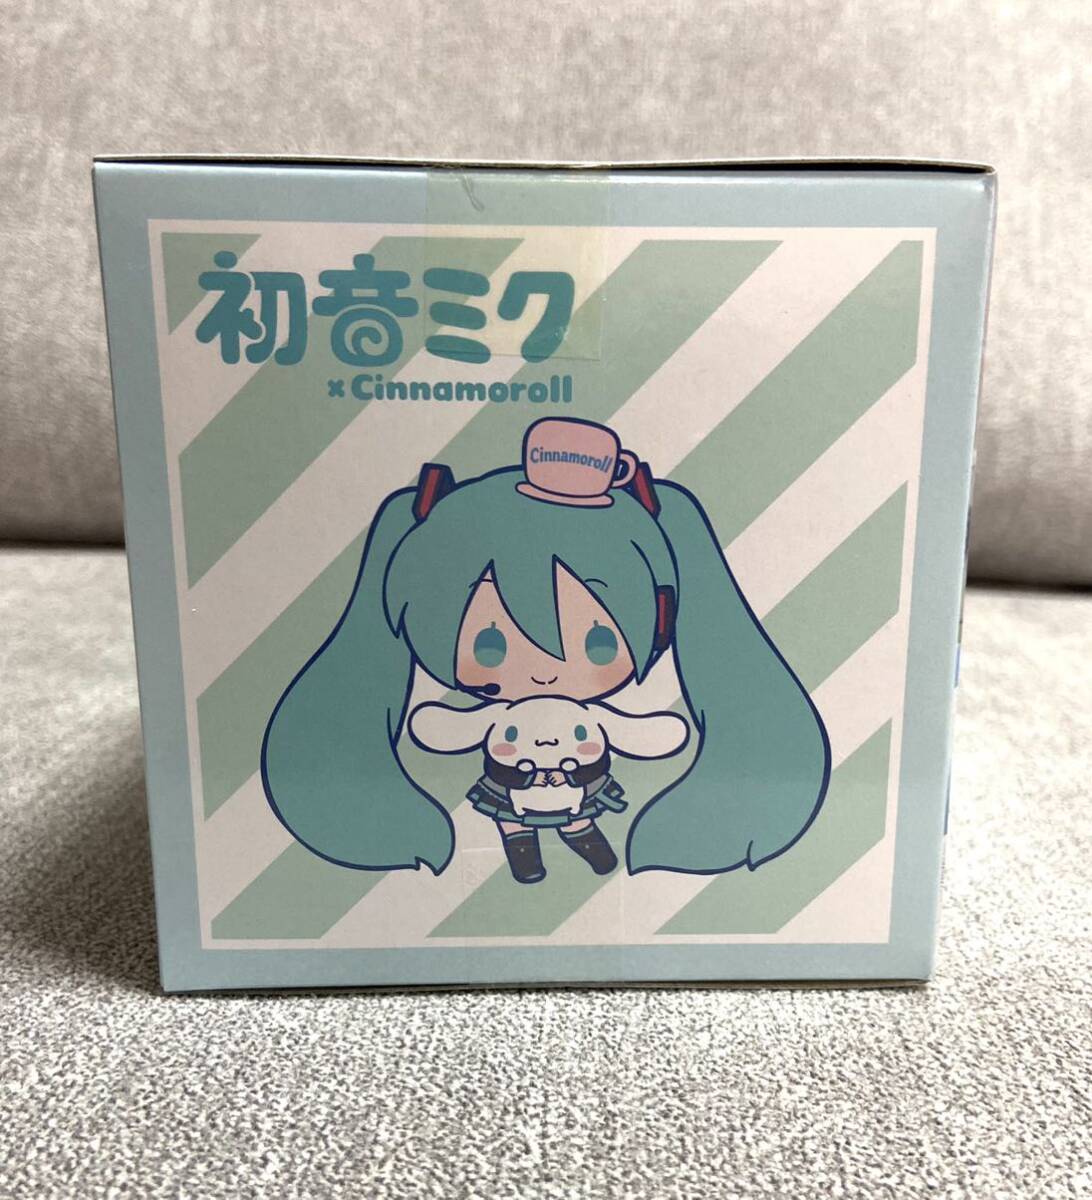  Hatsune Miku × Cinnamoroll мини фигурка нераспечатанный 